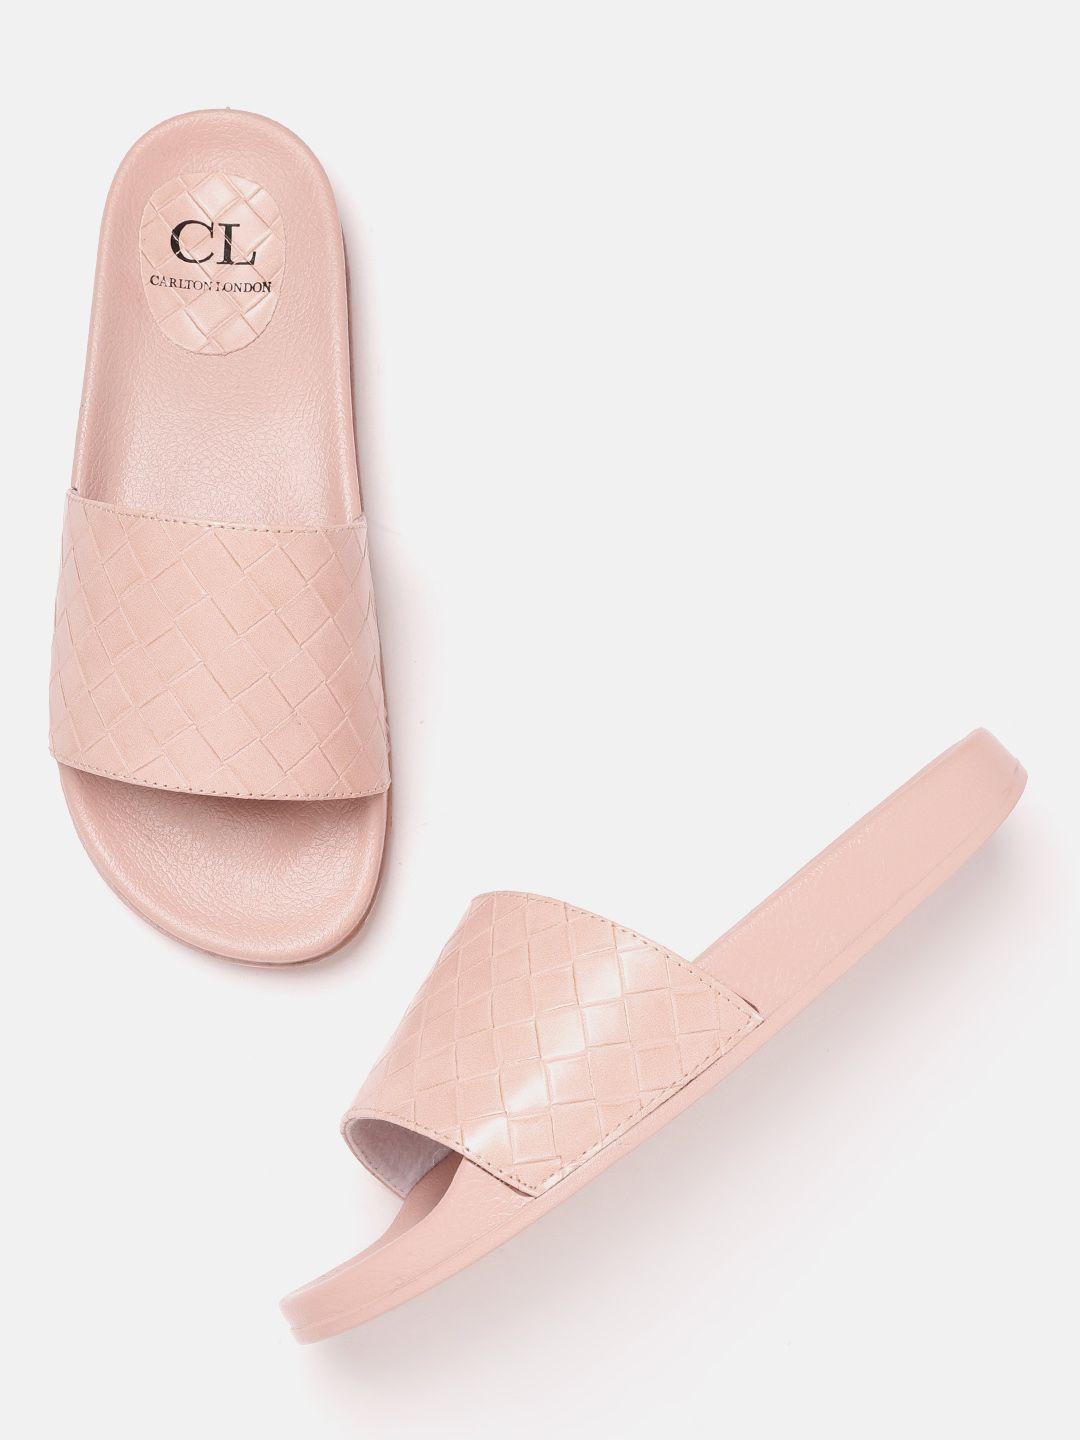 carlton-london-women-pink-basketweave-textured-open-toe-flats